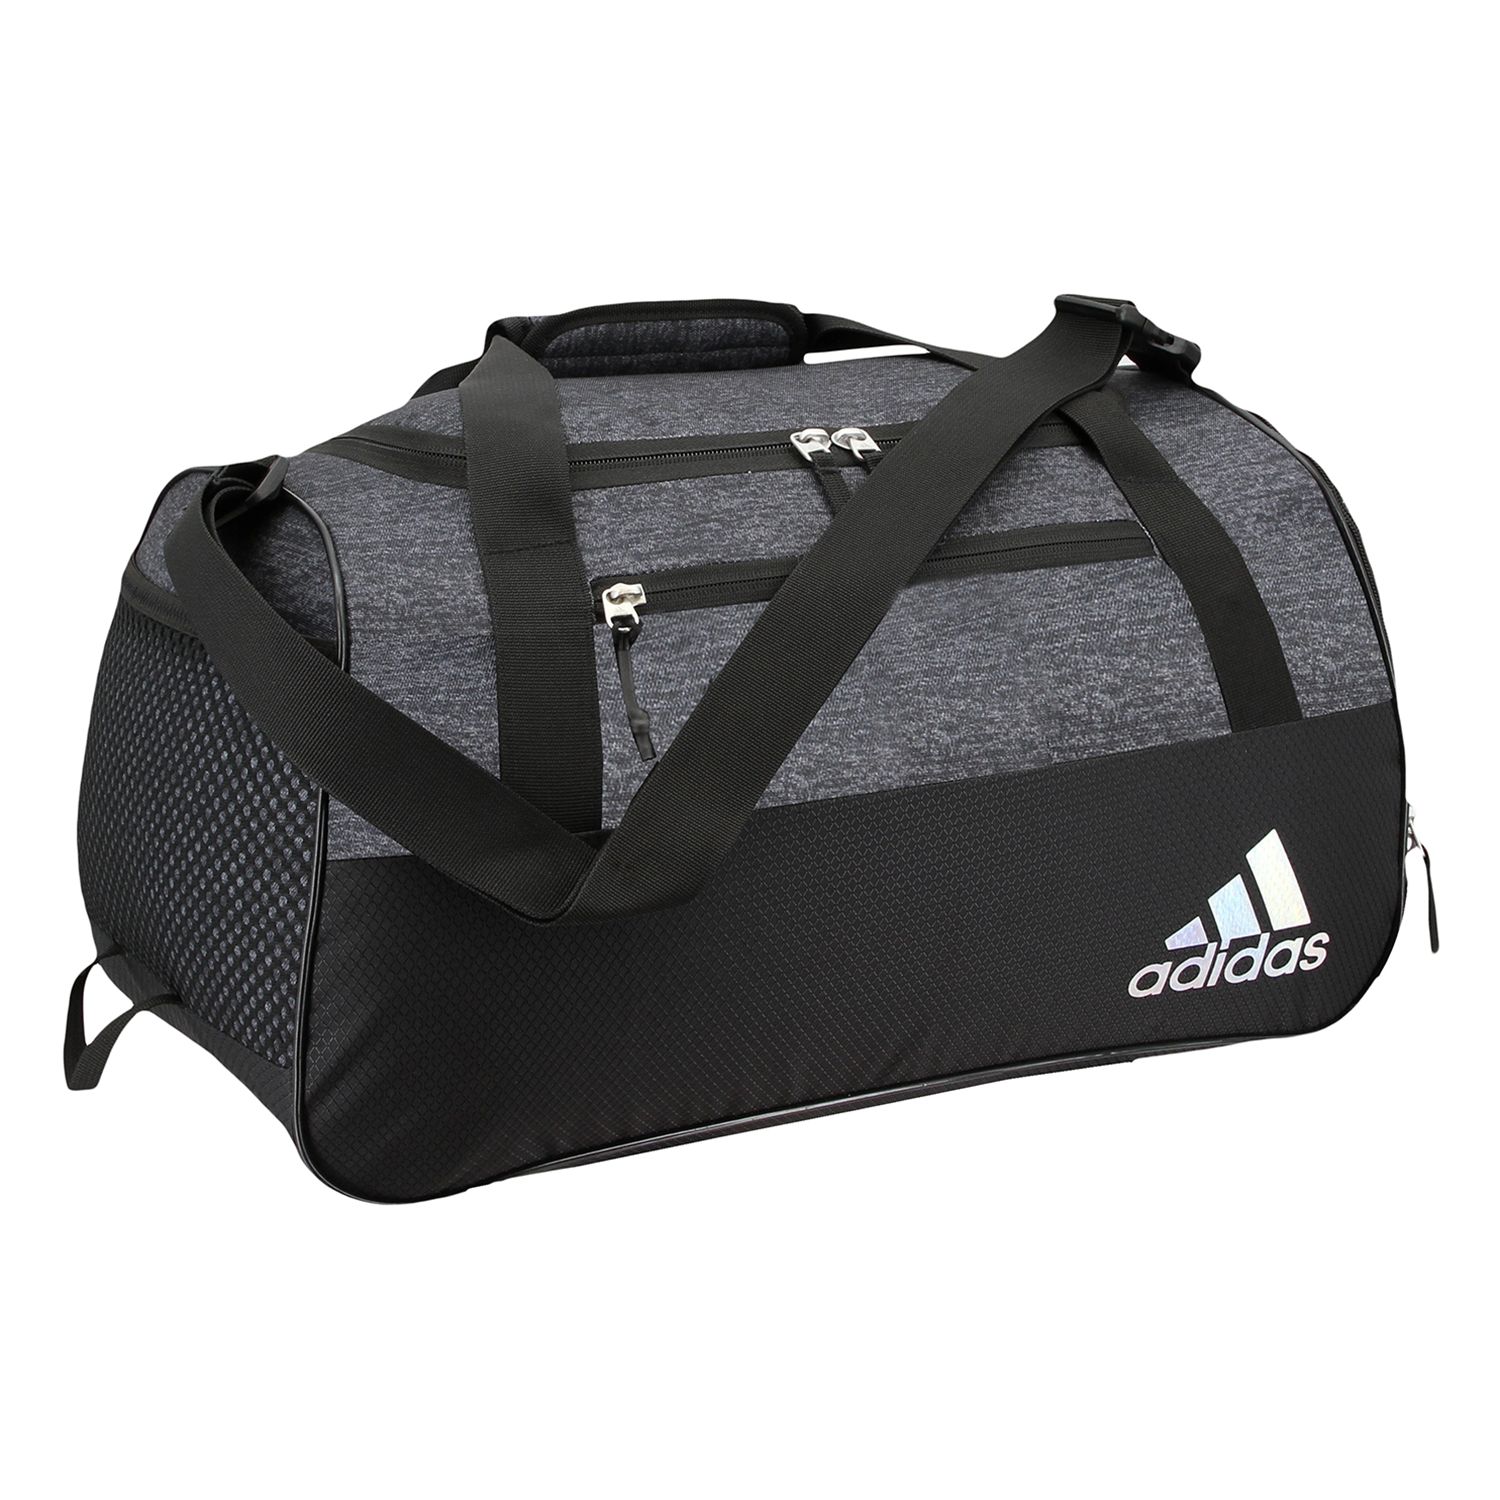 adidas squad iii duffel bag